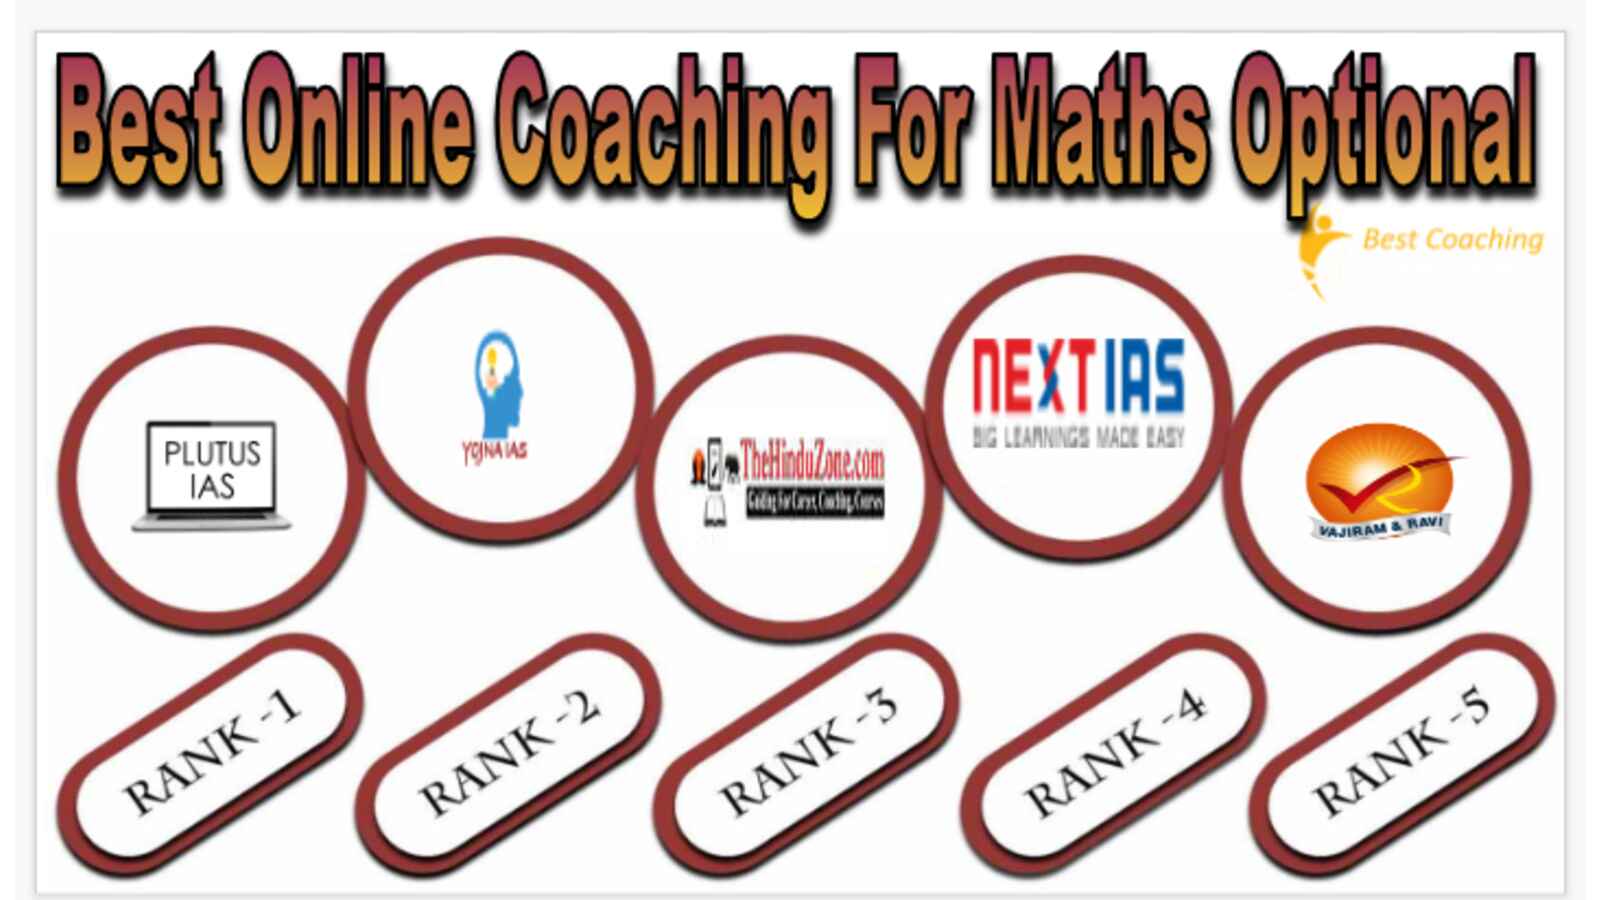 Best Online Coaching for Maths Optional